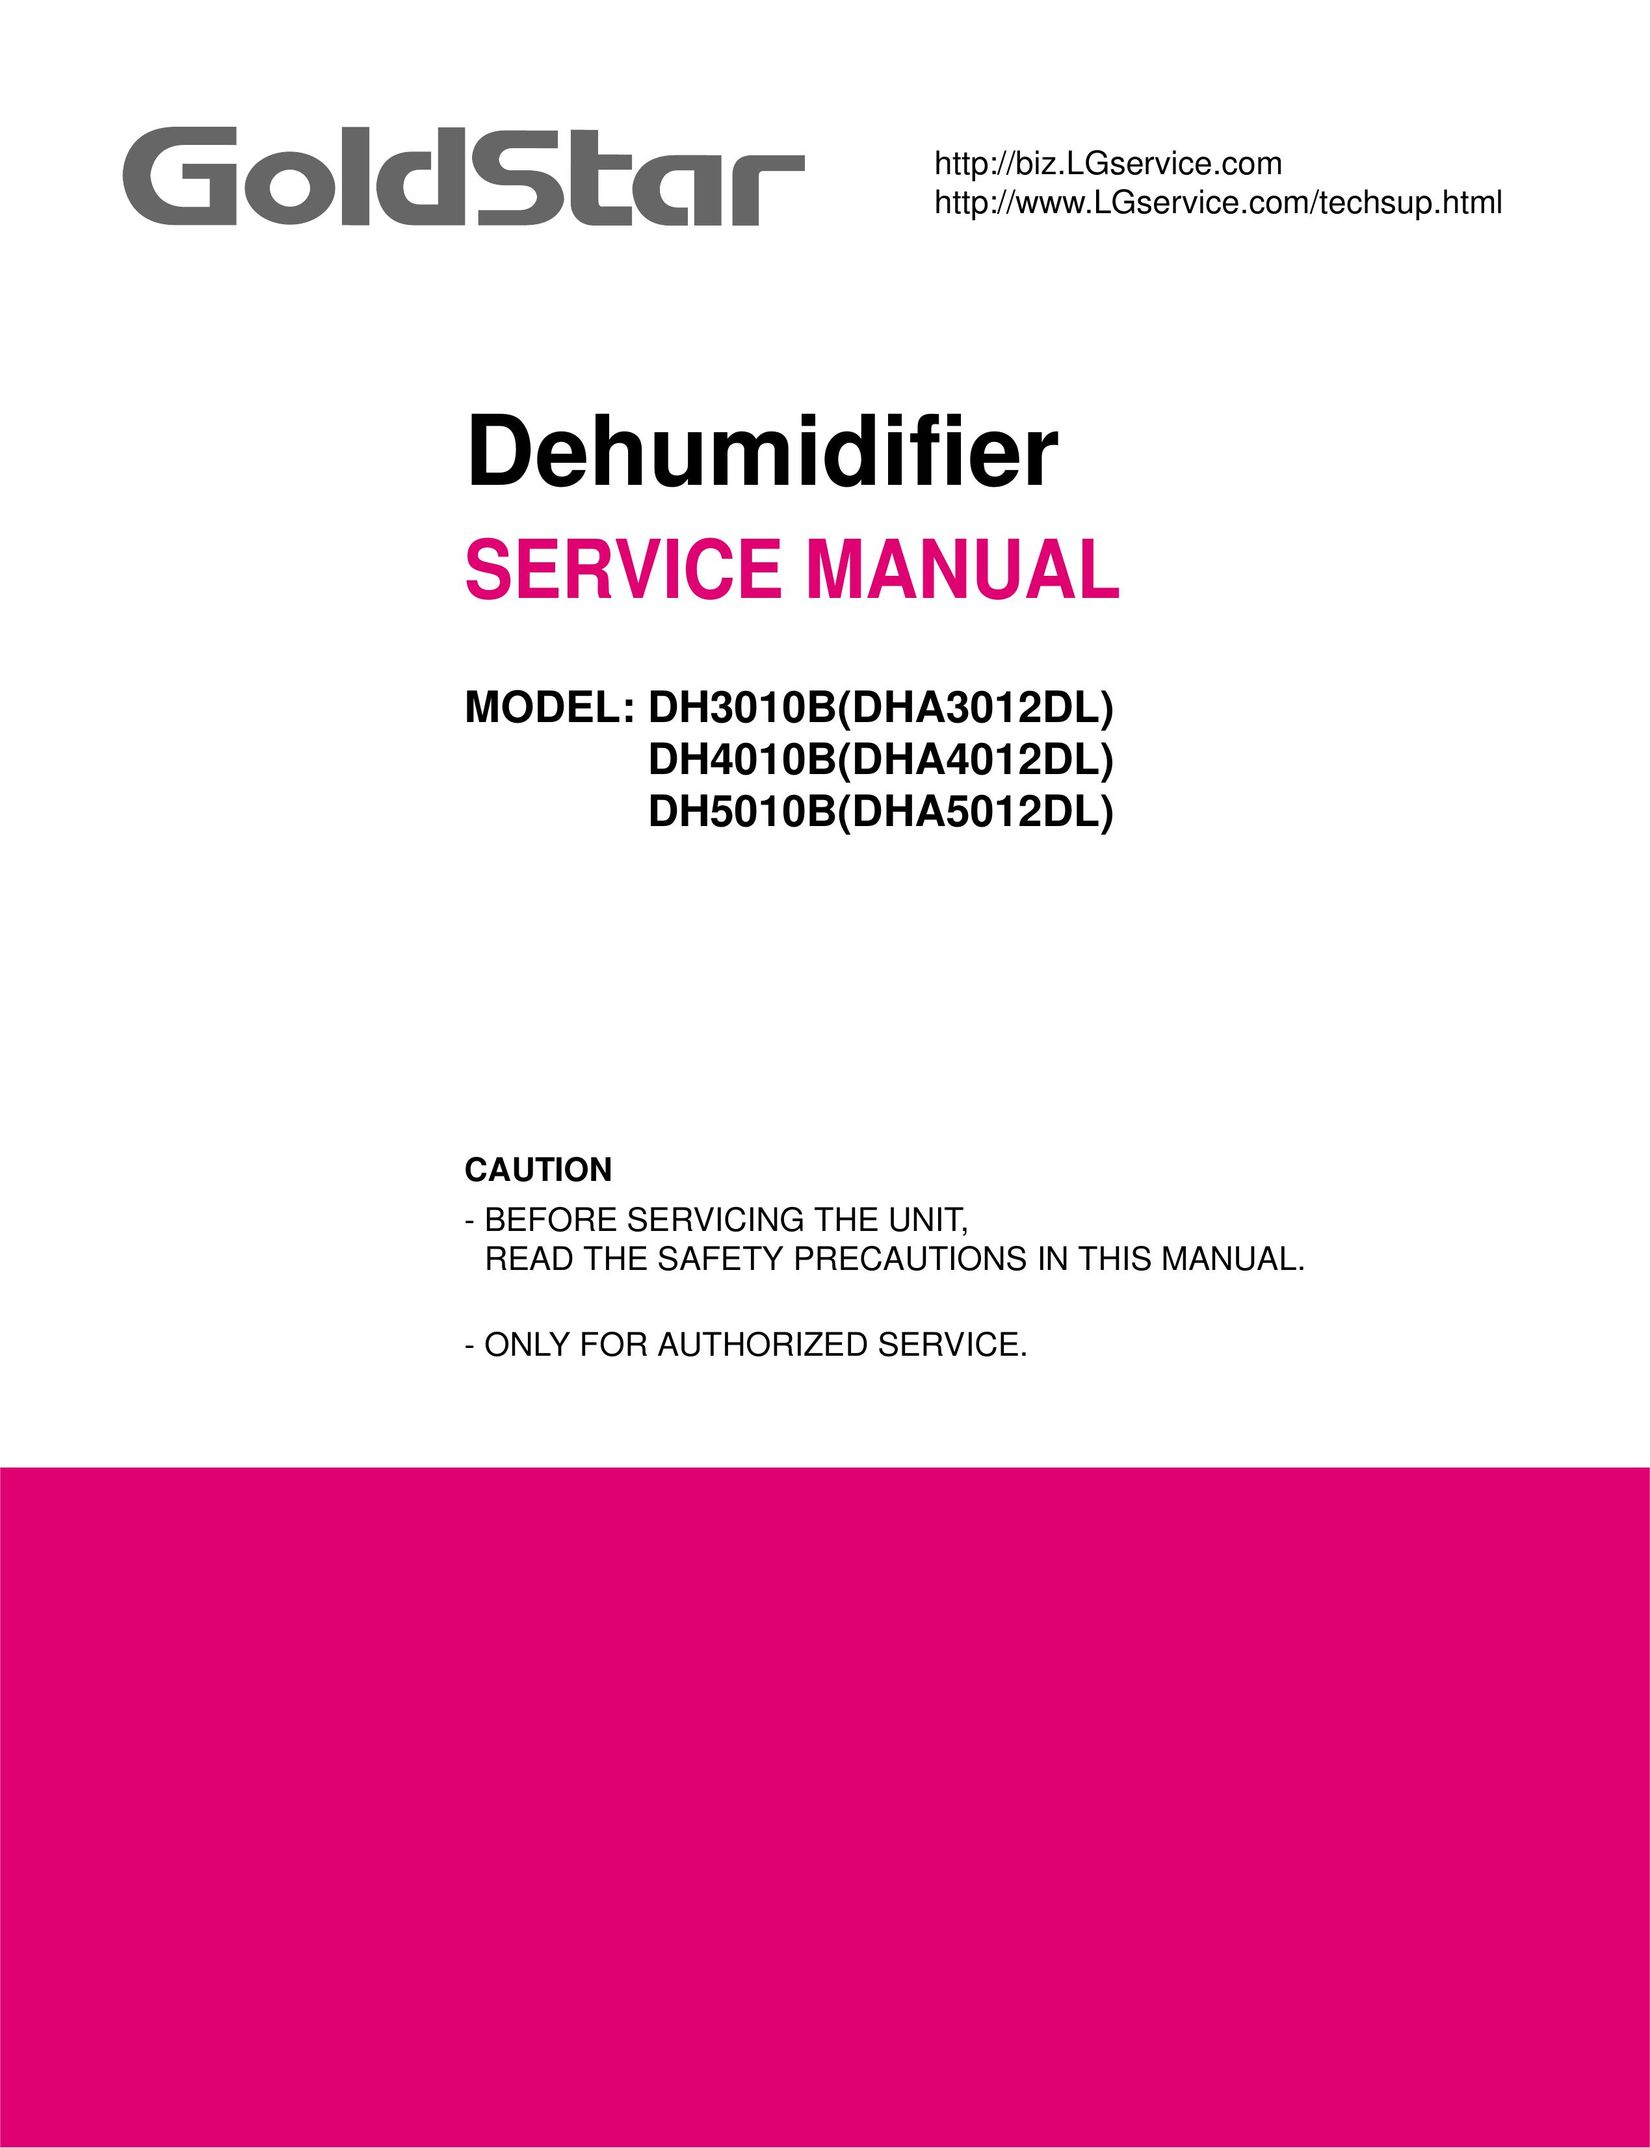 Goldstar DH5010B Dehumidifier User Manual